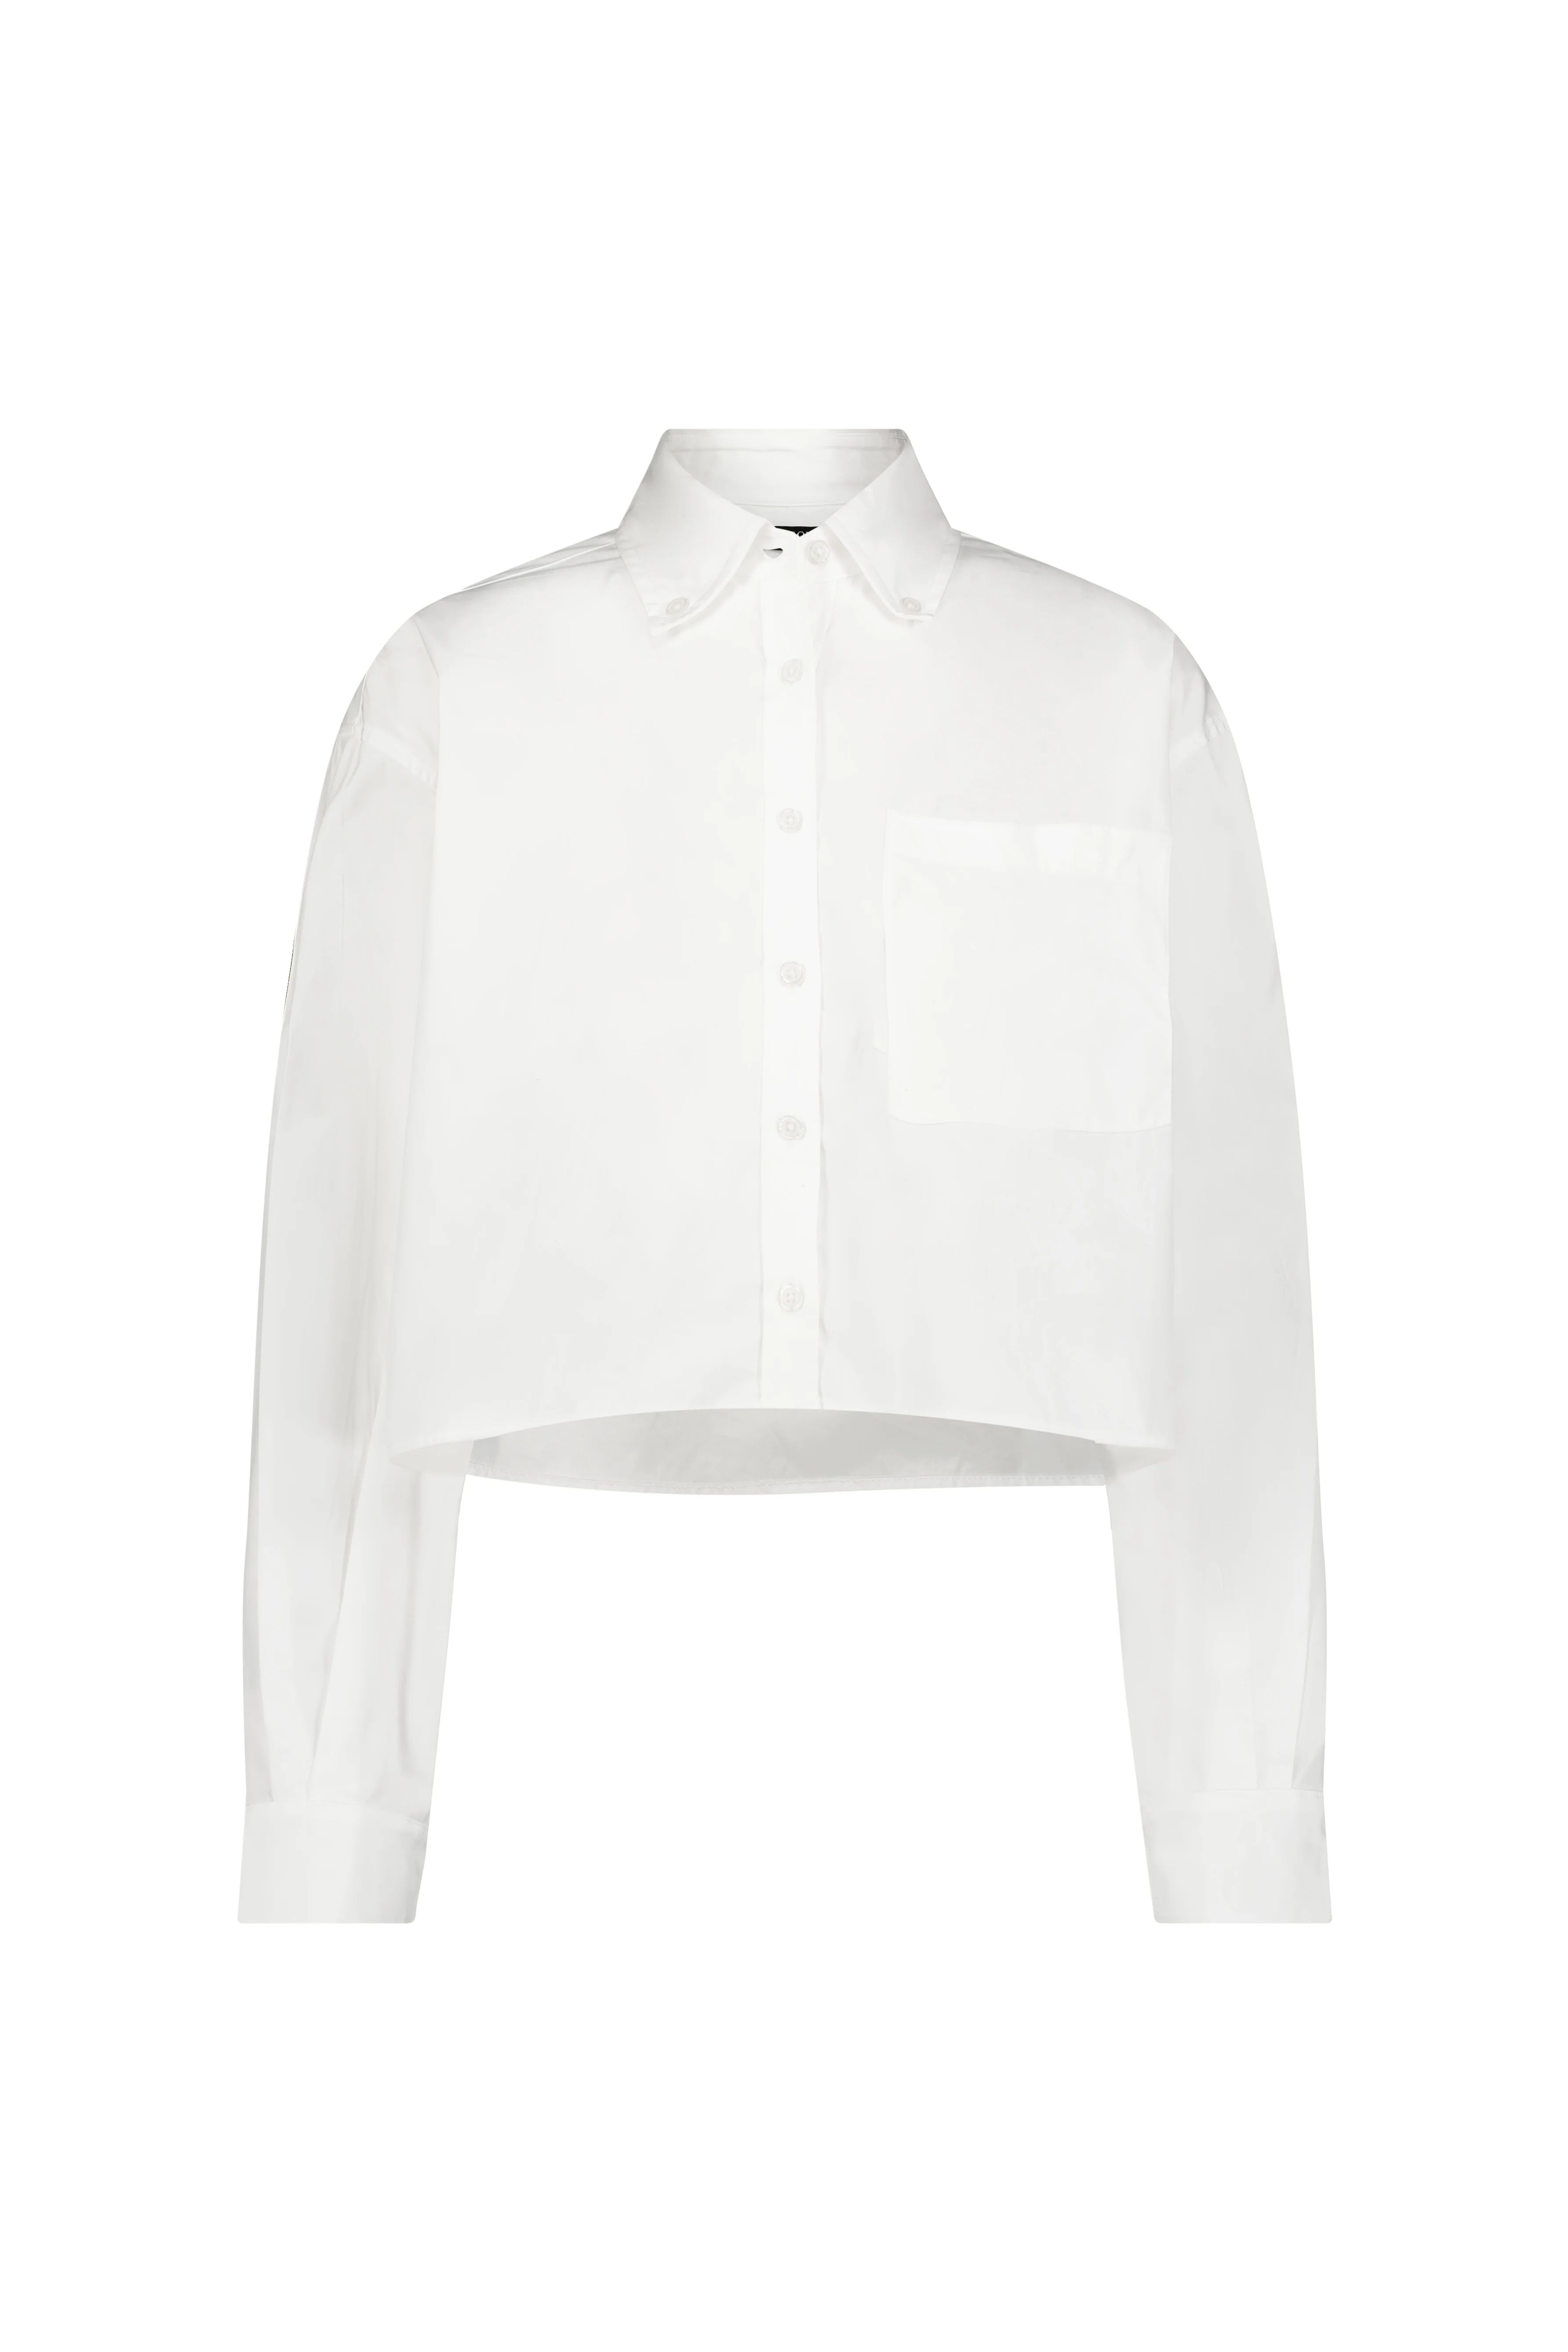 Boxy White Button-Down Shirt | MAYSON the label